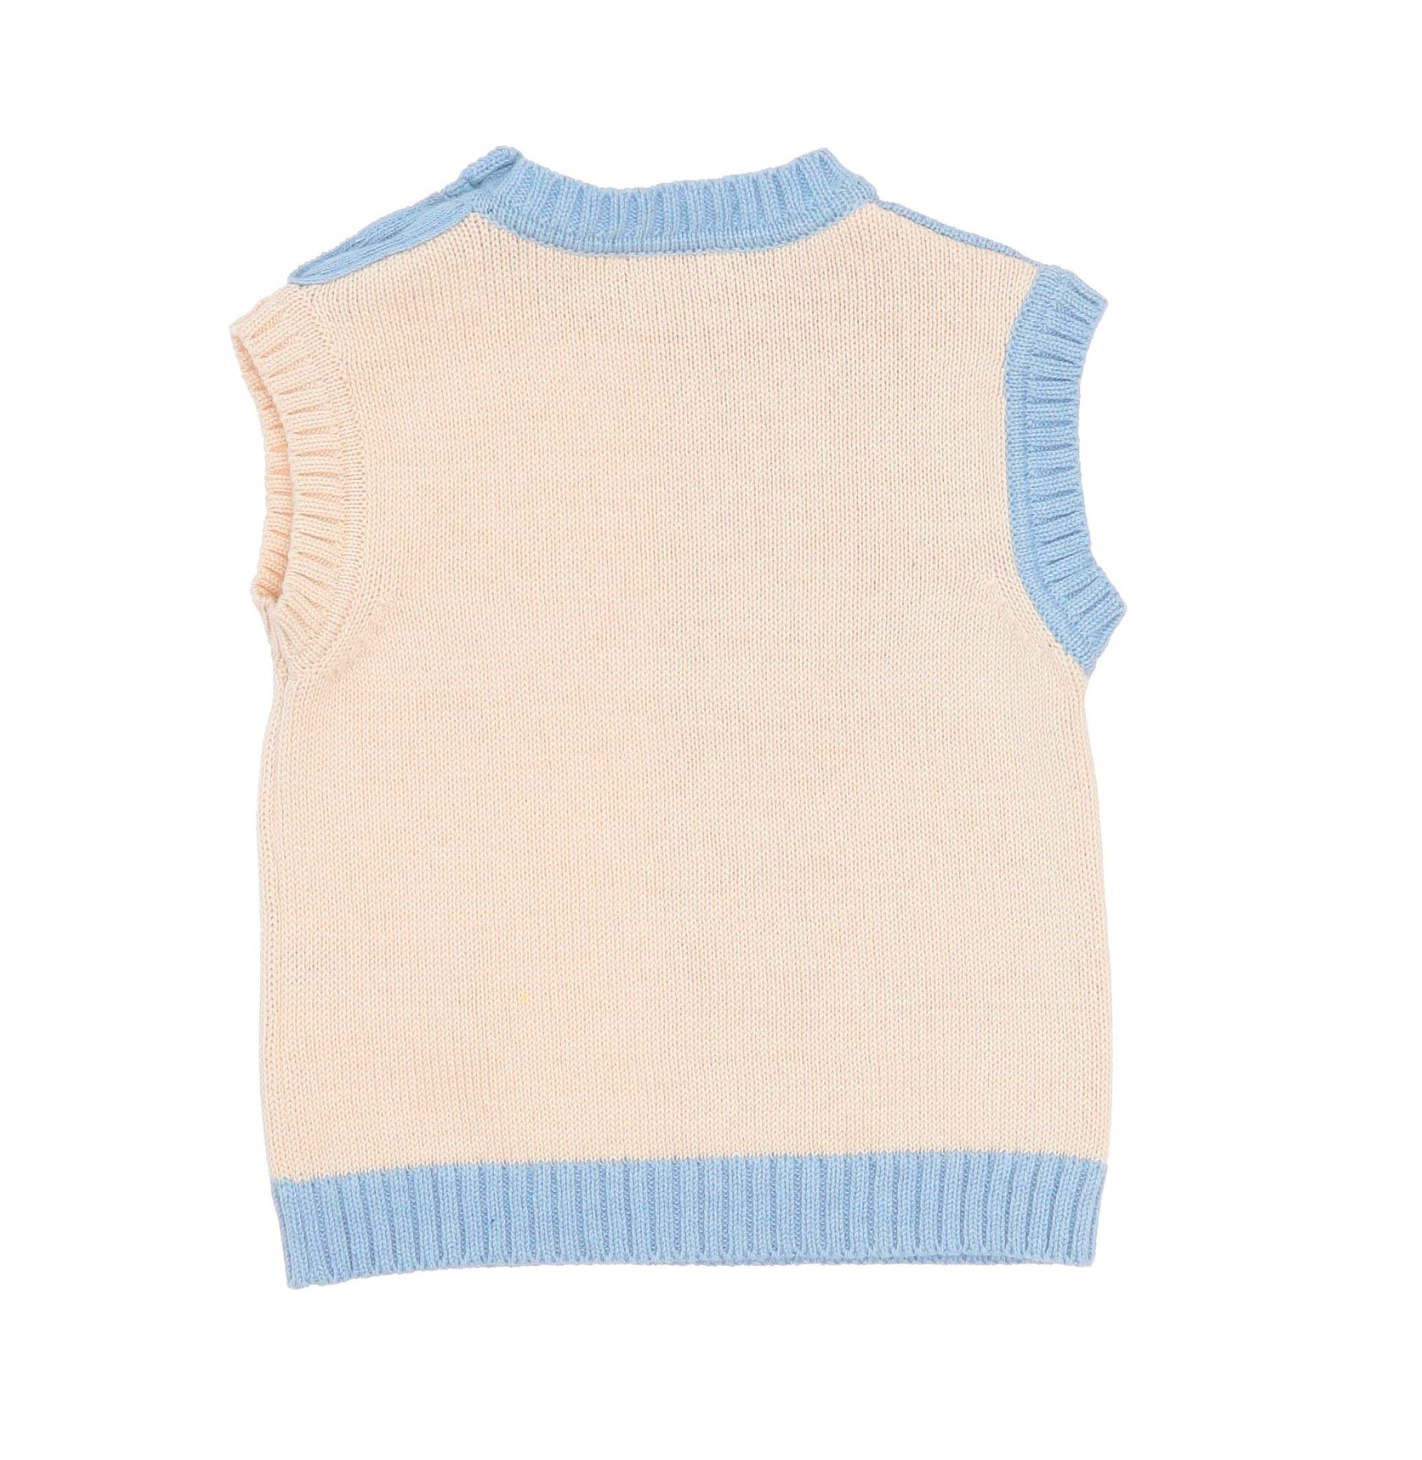 LE BEBE - Blue &amp; white cotton sleeveless jumper - 6 months